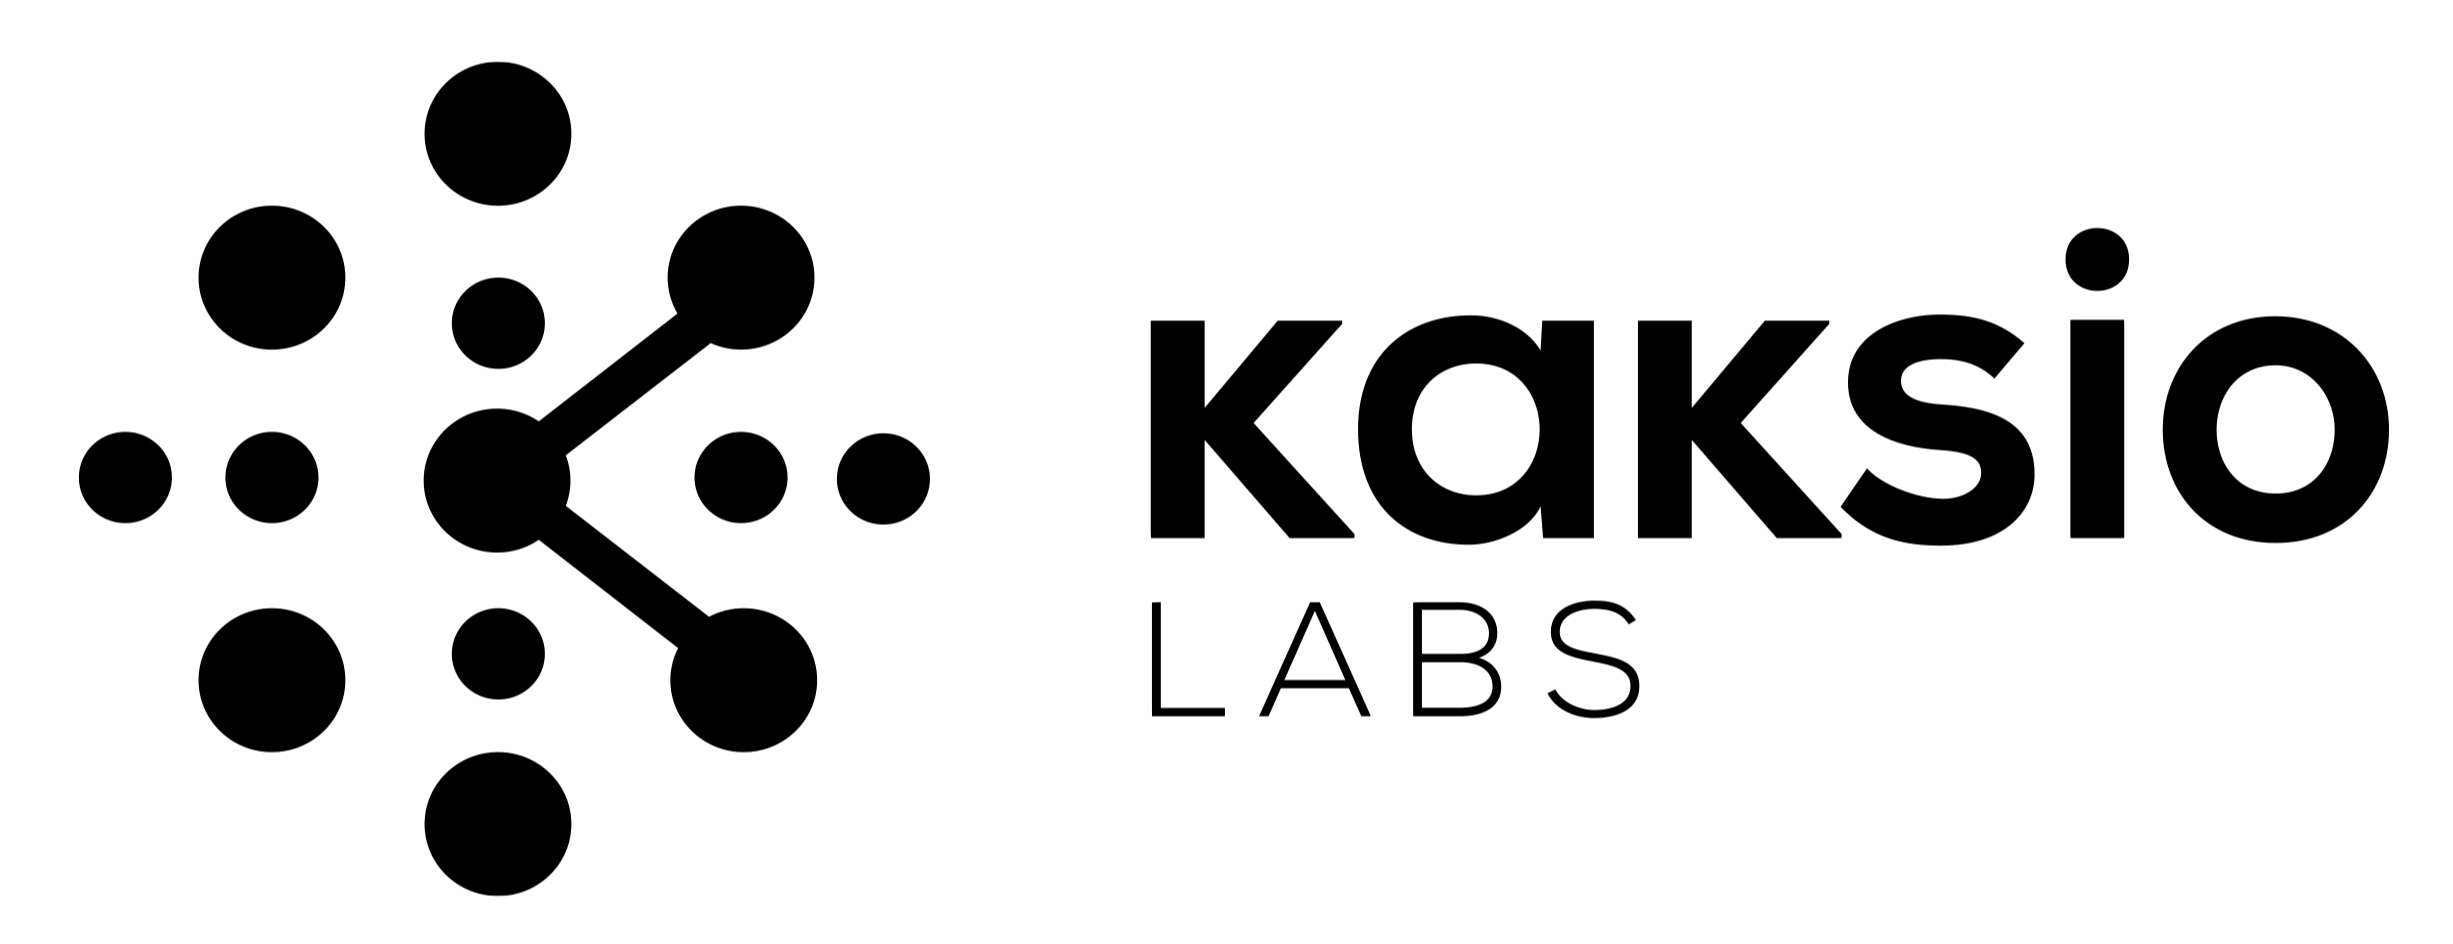 kaksio-labs-logo-black-1-1